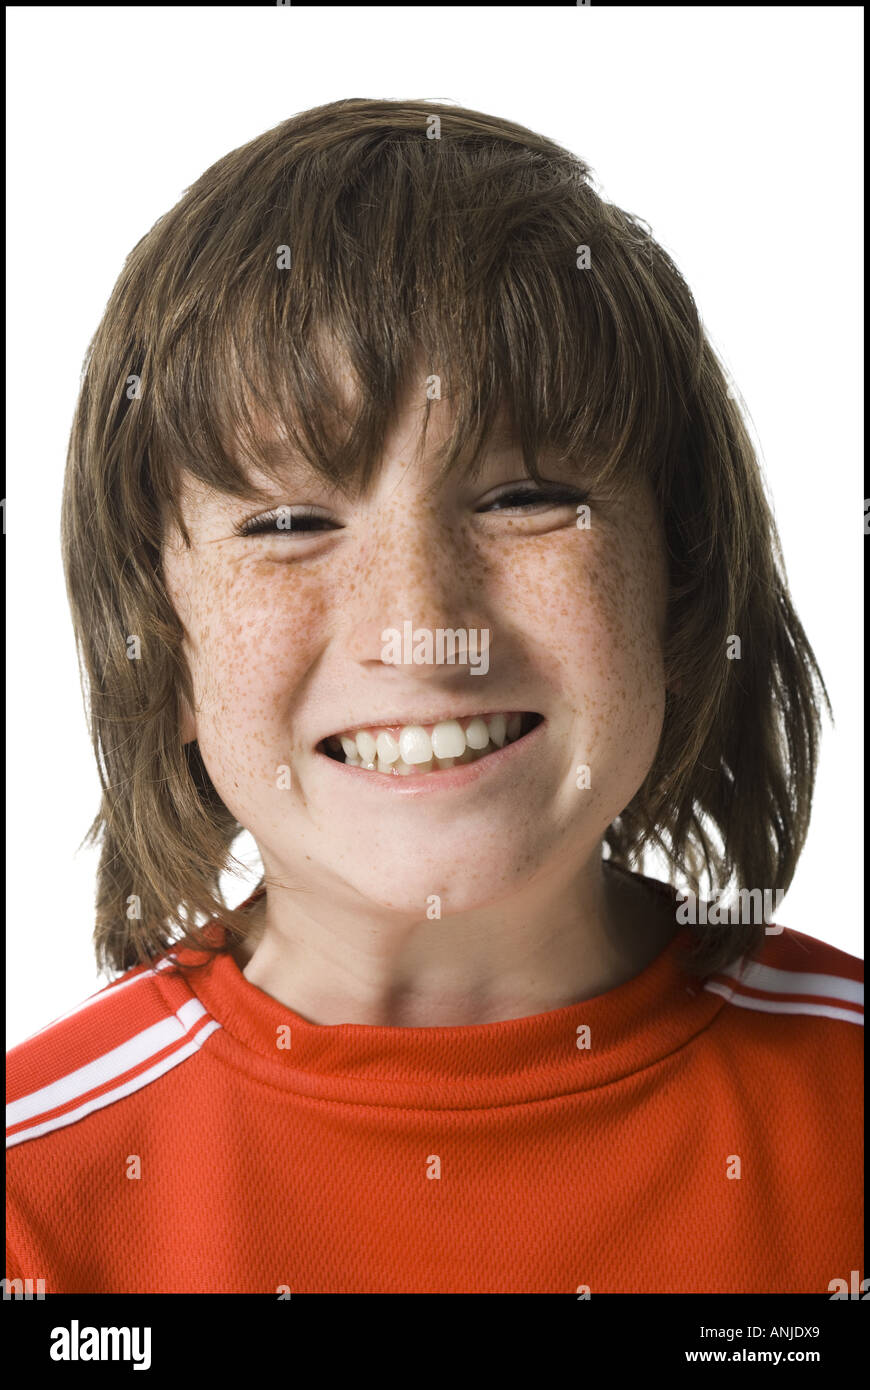 Portrait of a boy smiling Stock Photo